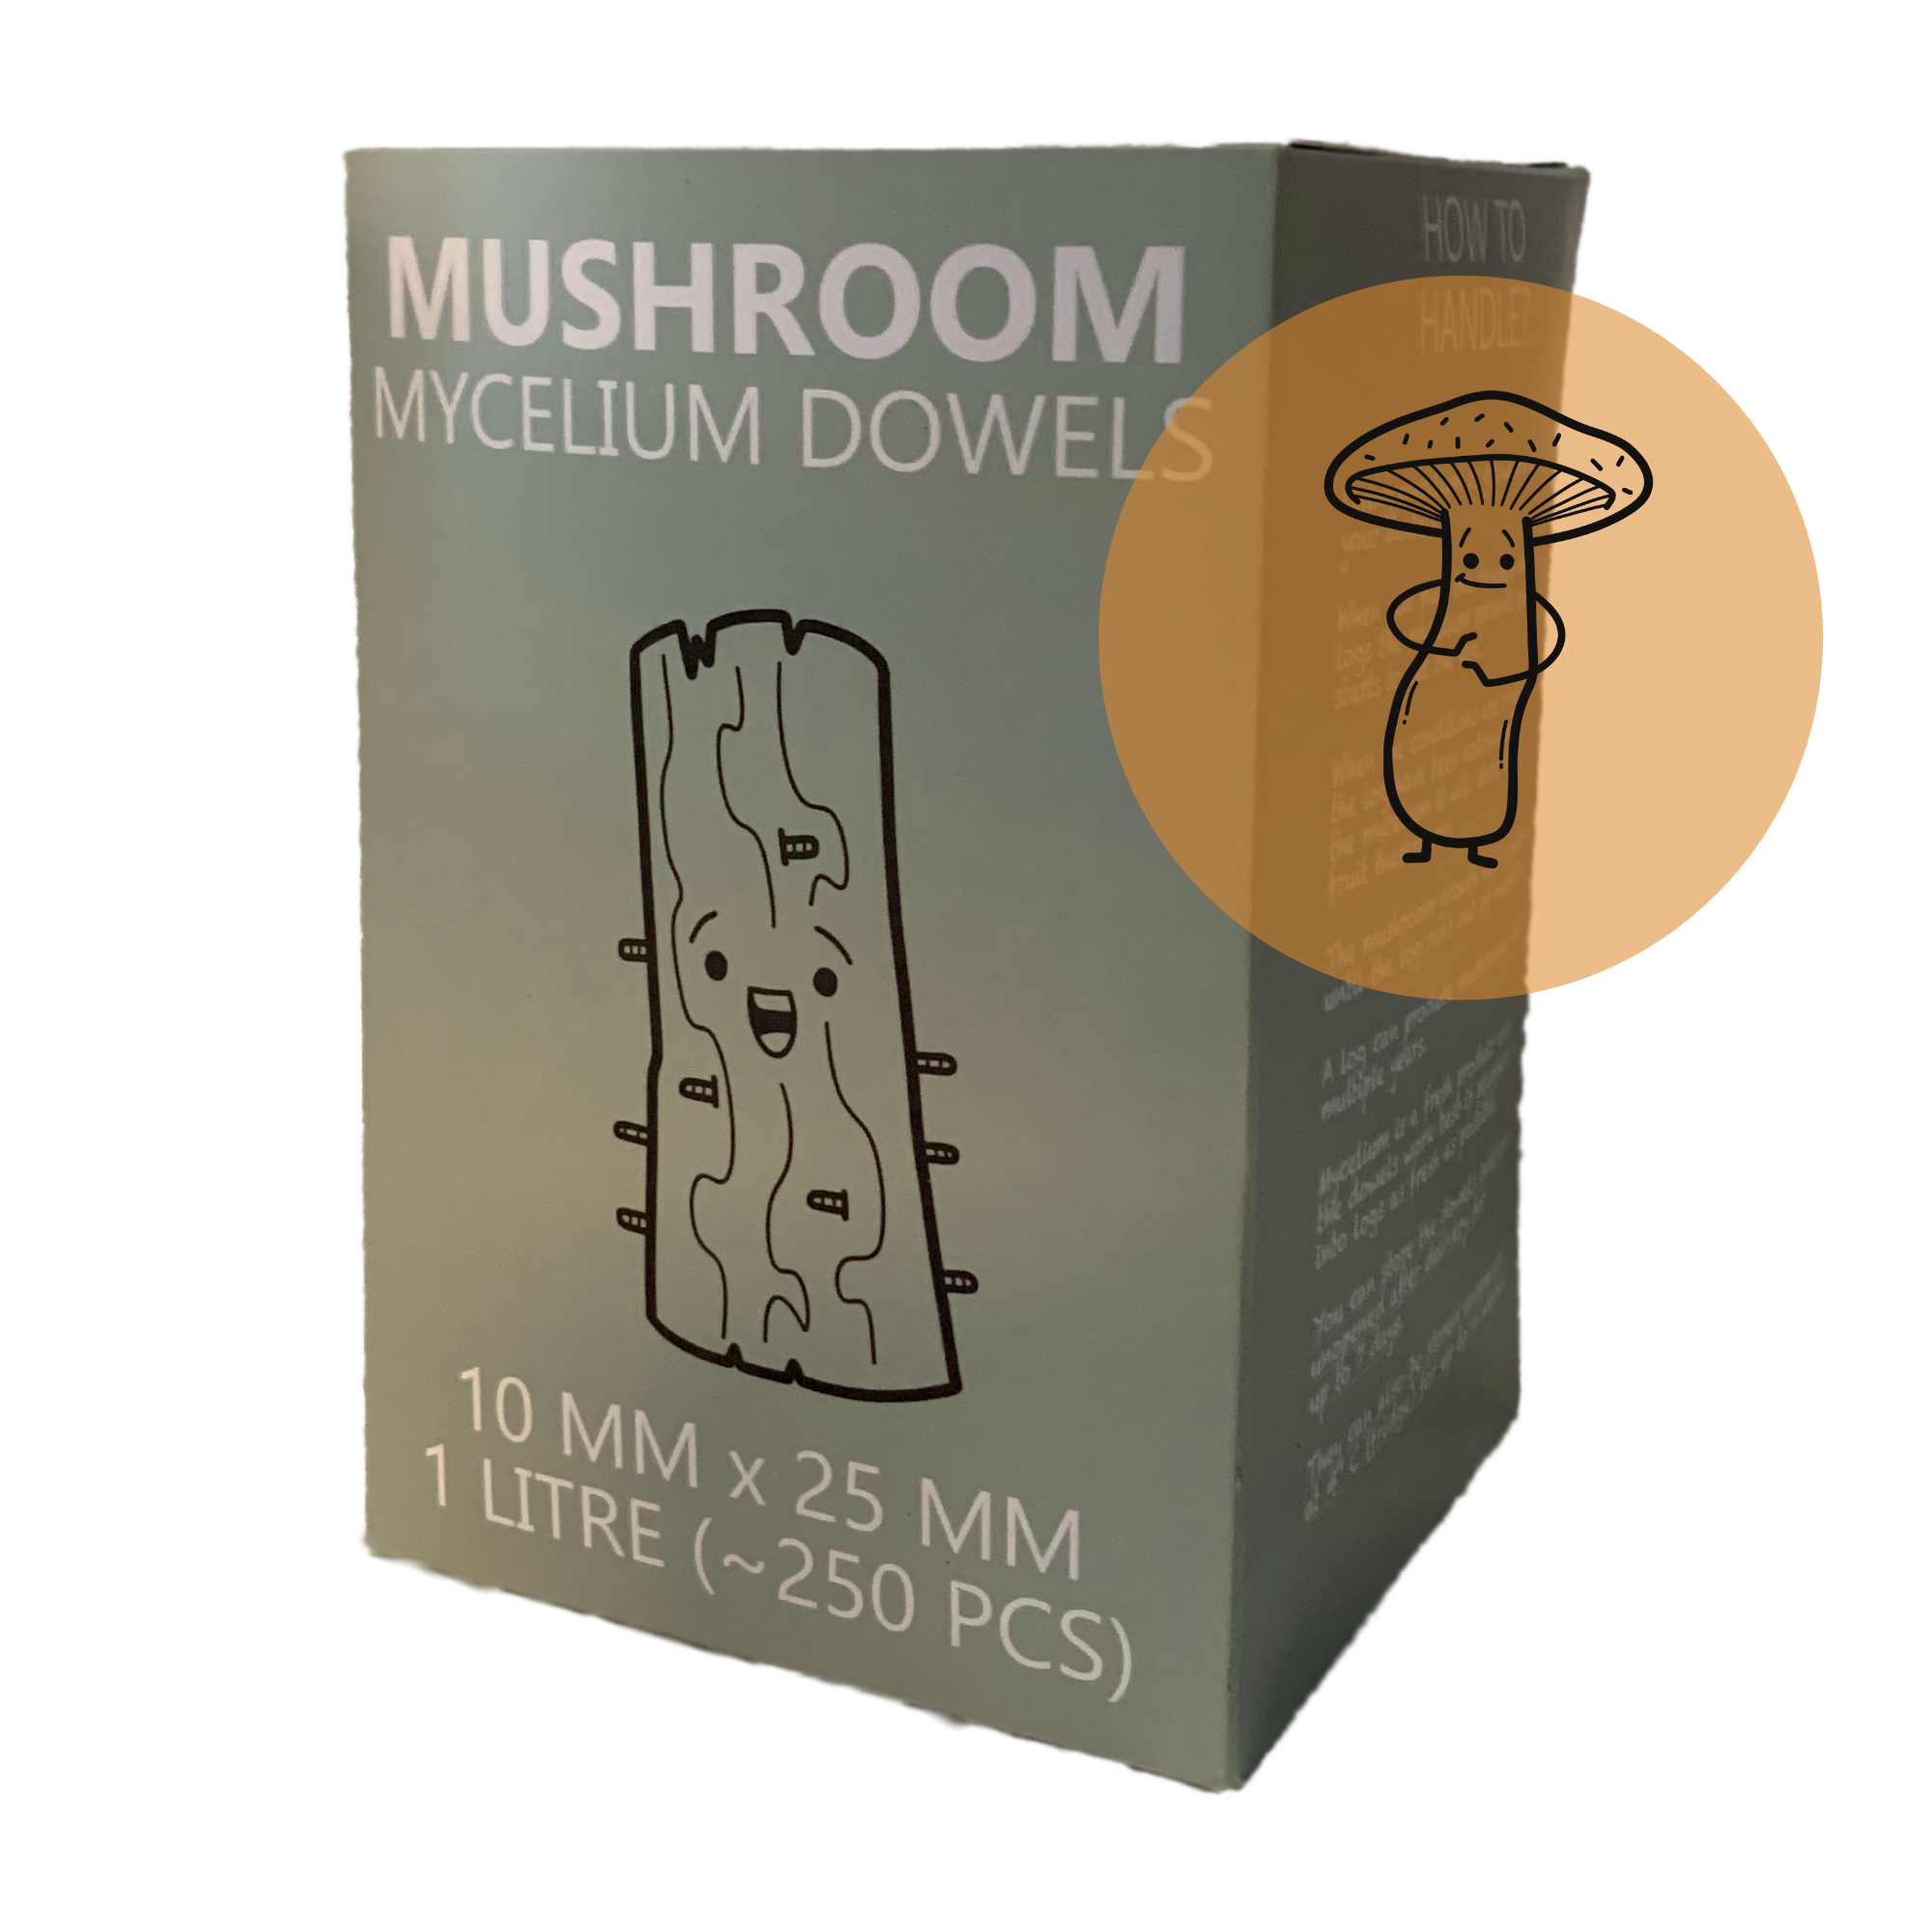 Chestnut mushroom dowels